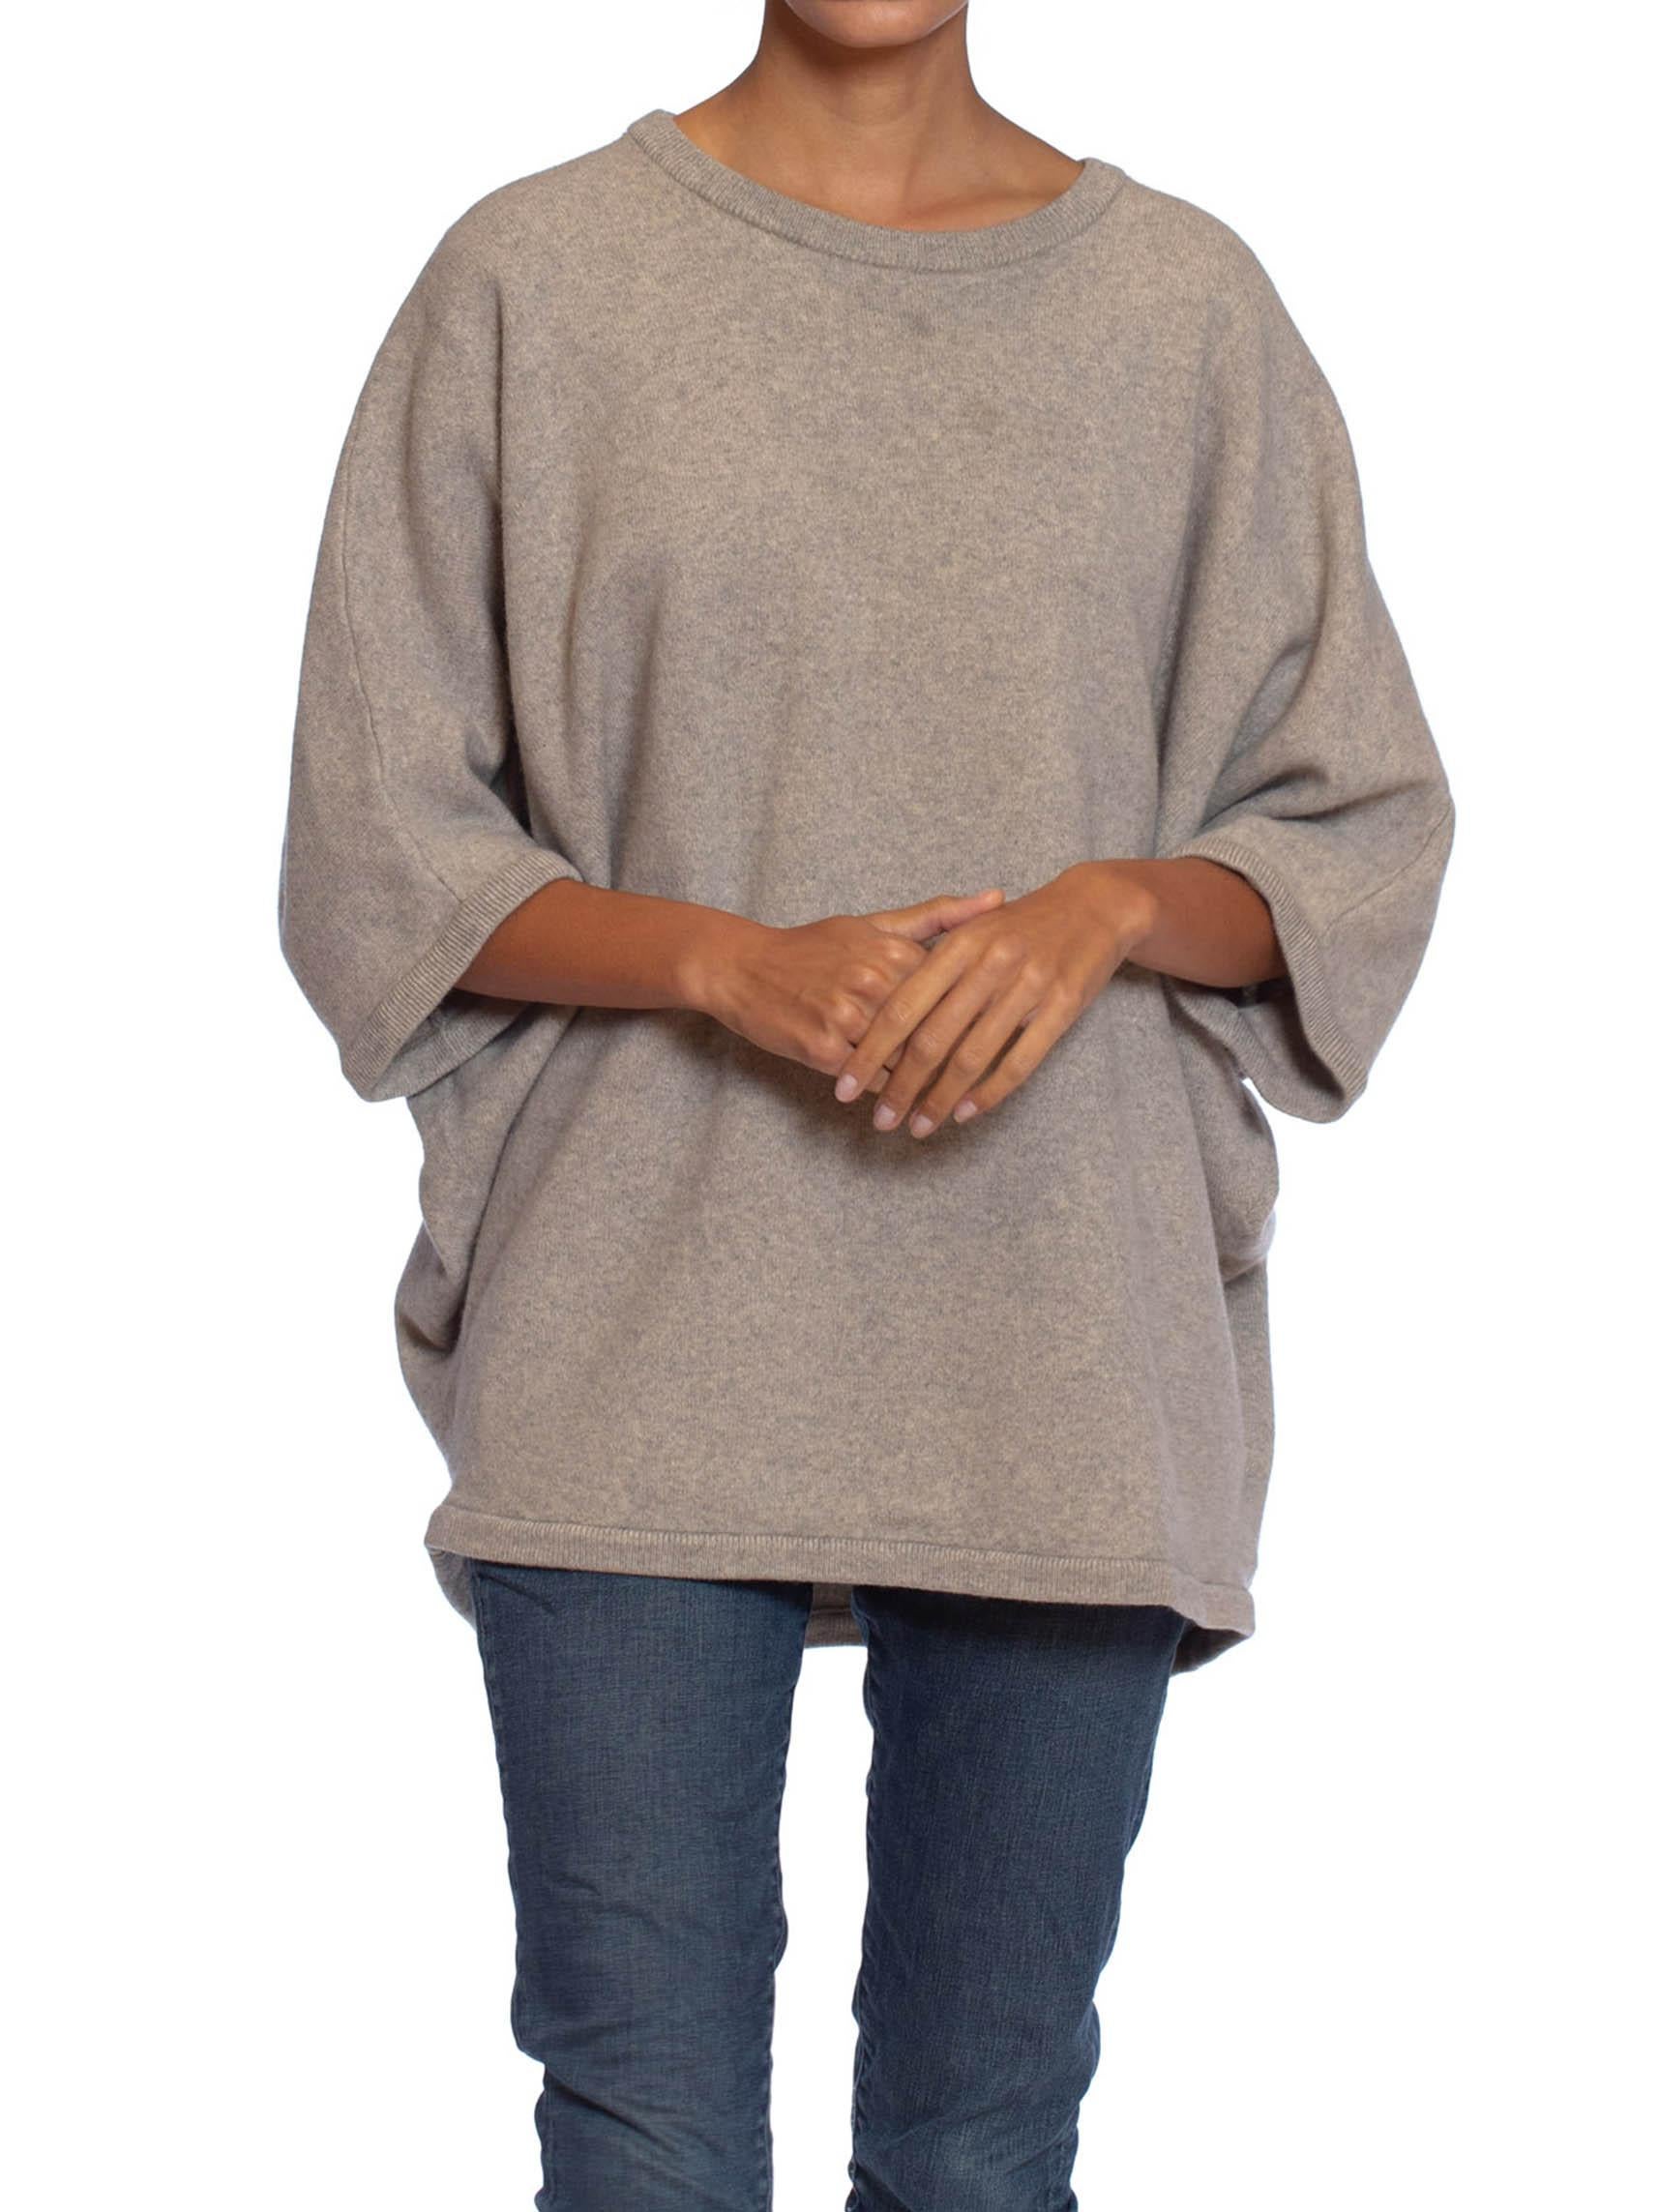 1980S MICHAEL KORS Heather Grey Cashmere Knit Oversized Dolman Sweater 1